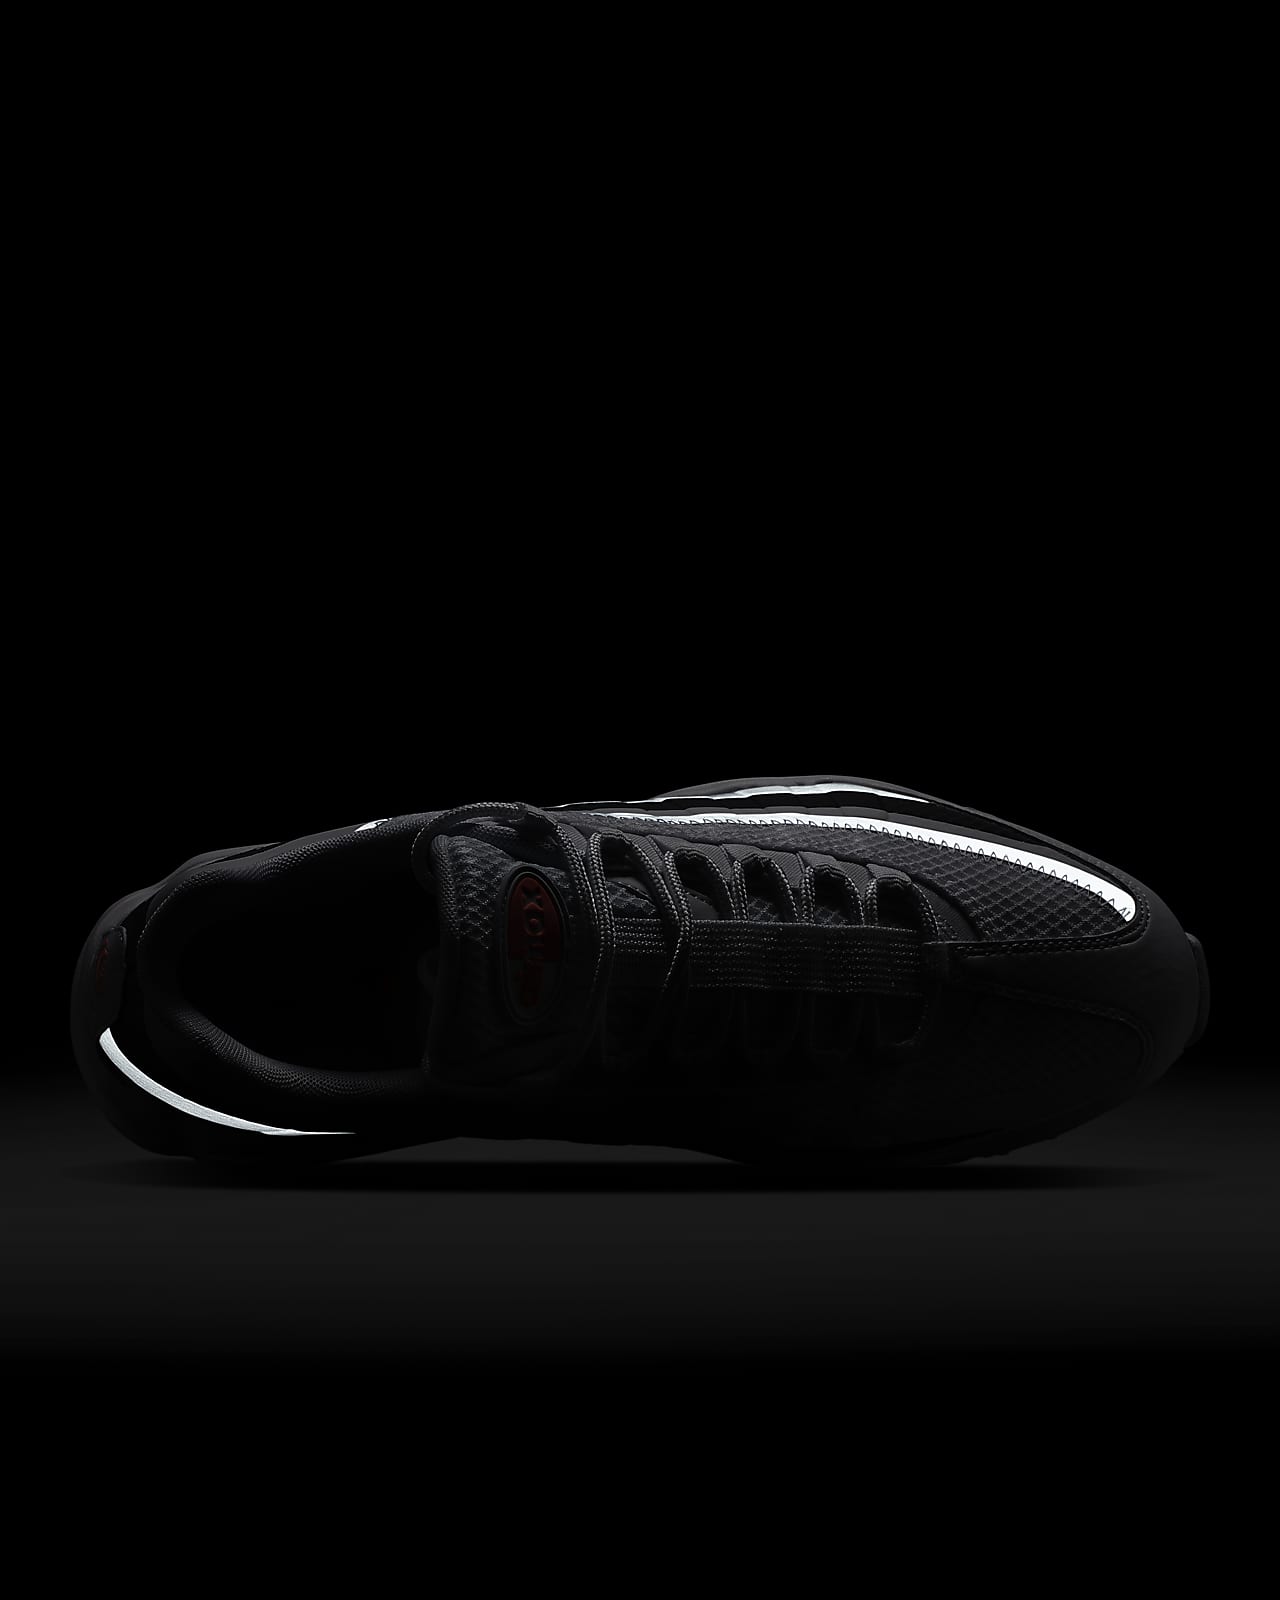 Black Nike Air Max 95 Ultra